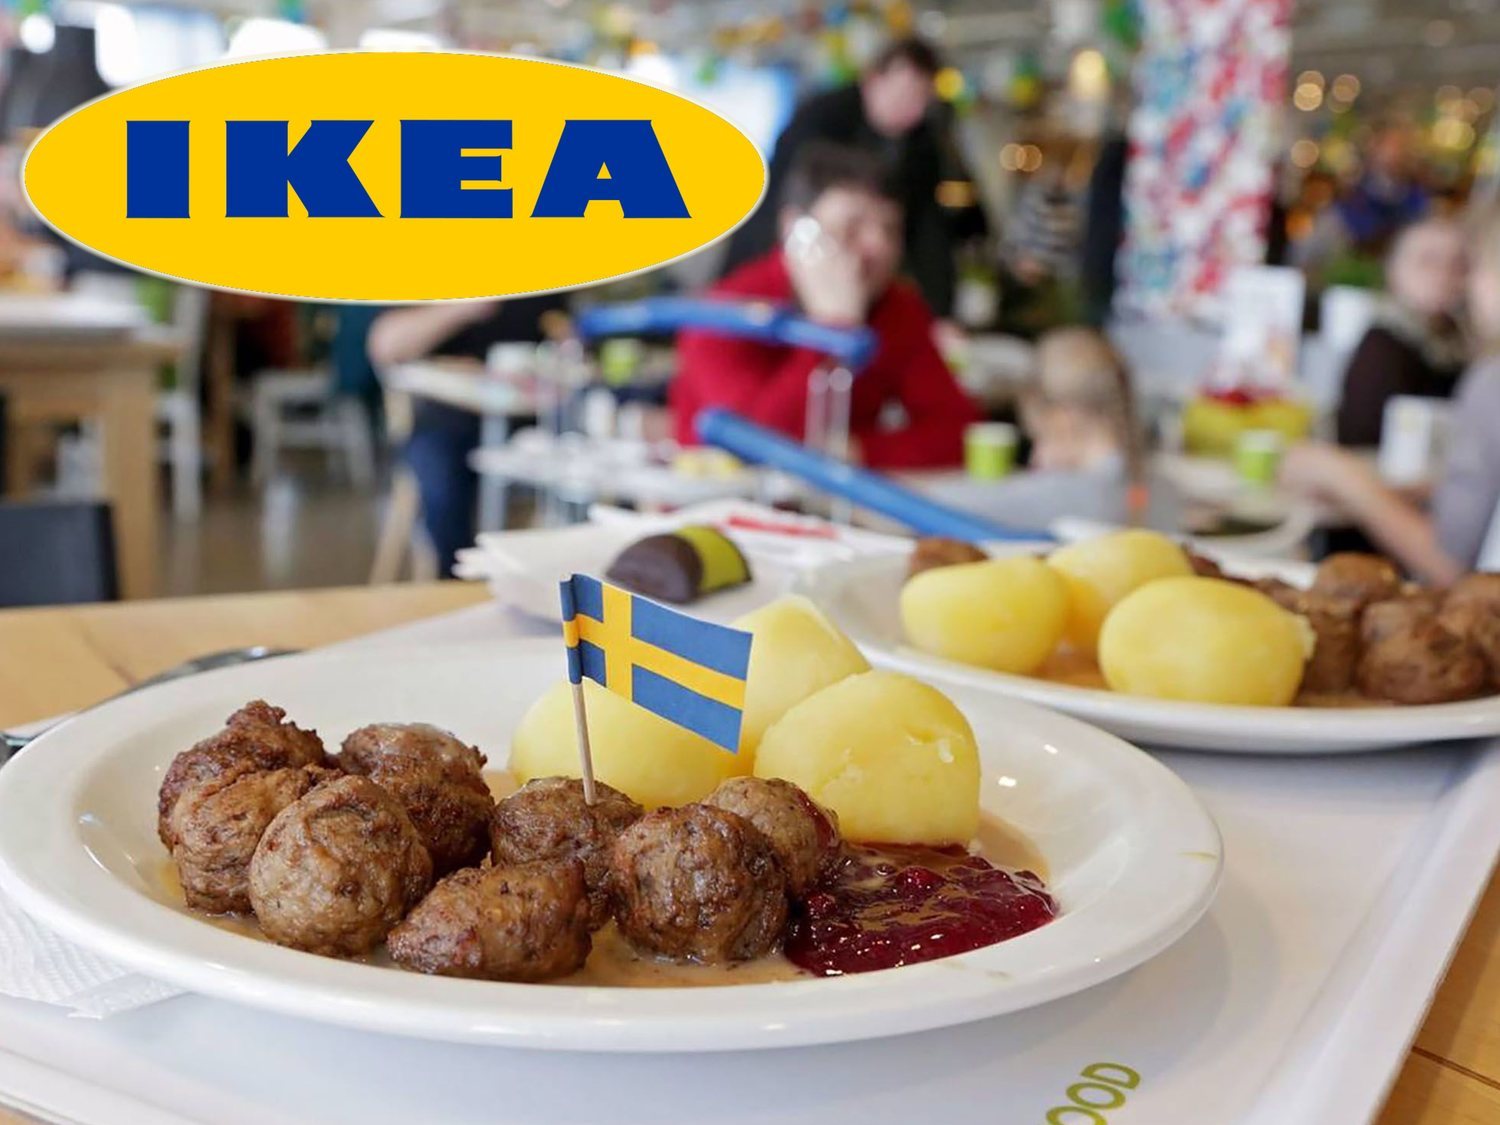 Ikea comparte la receta de sus famosas albóndigas